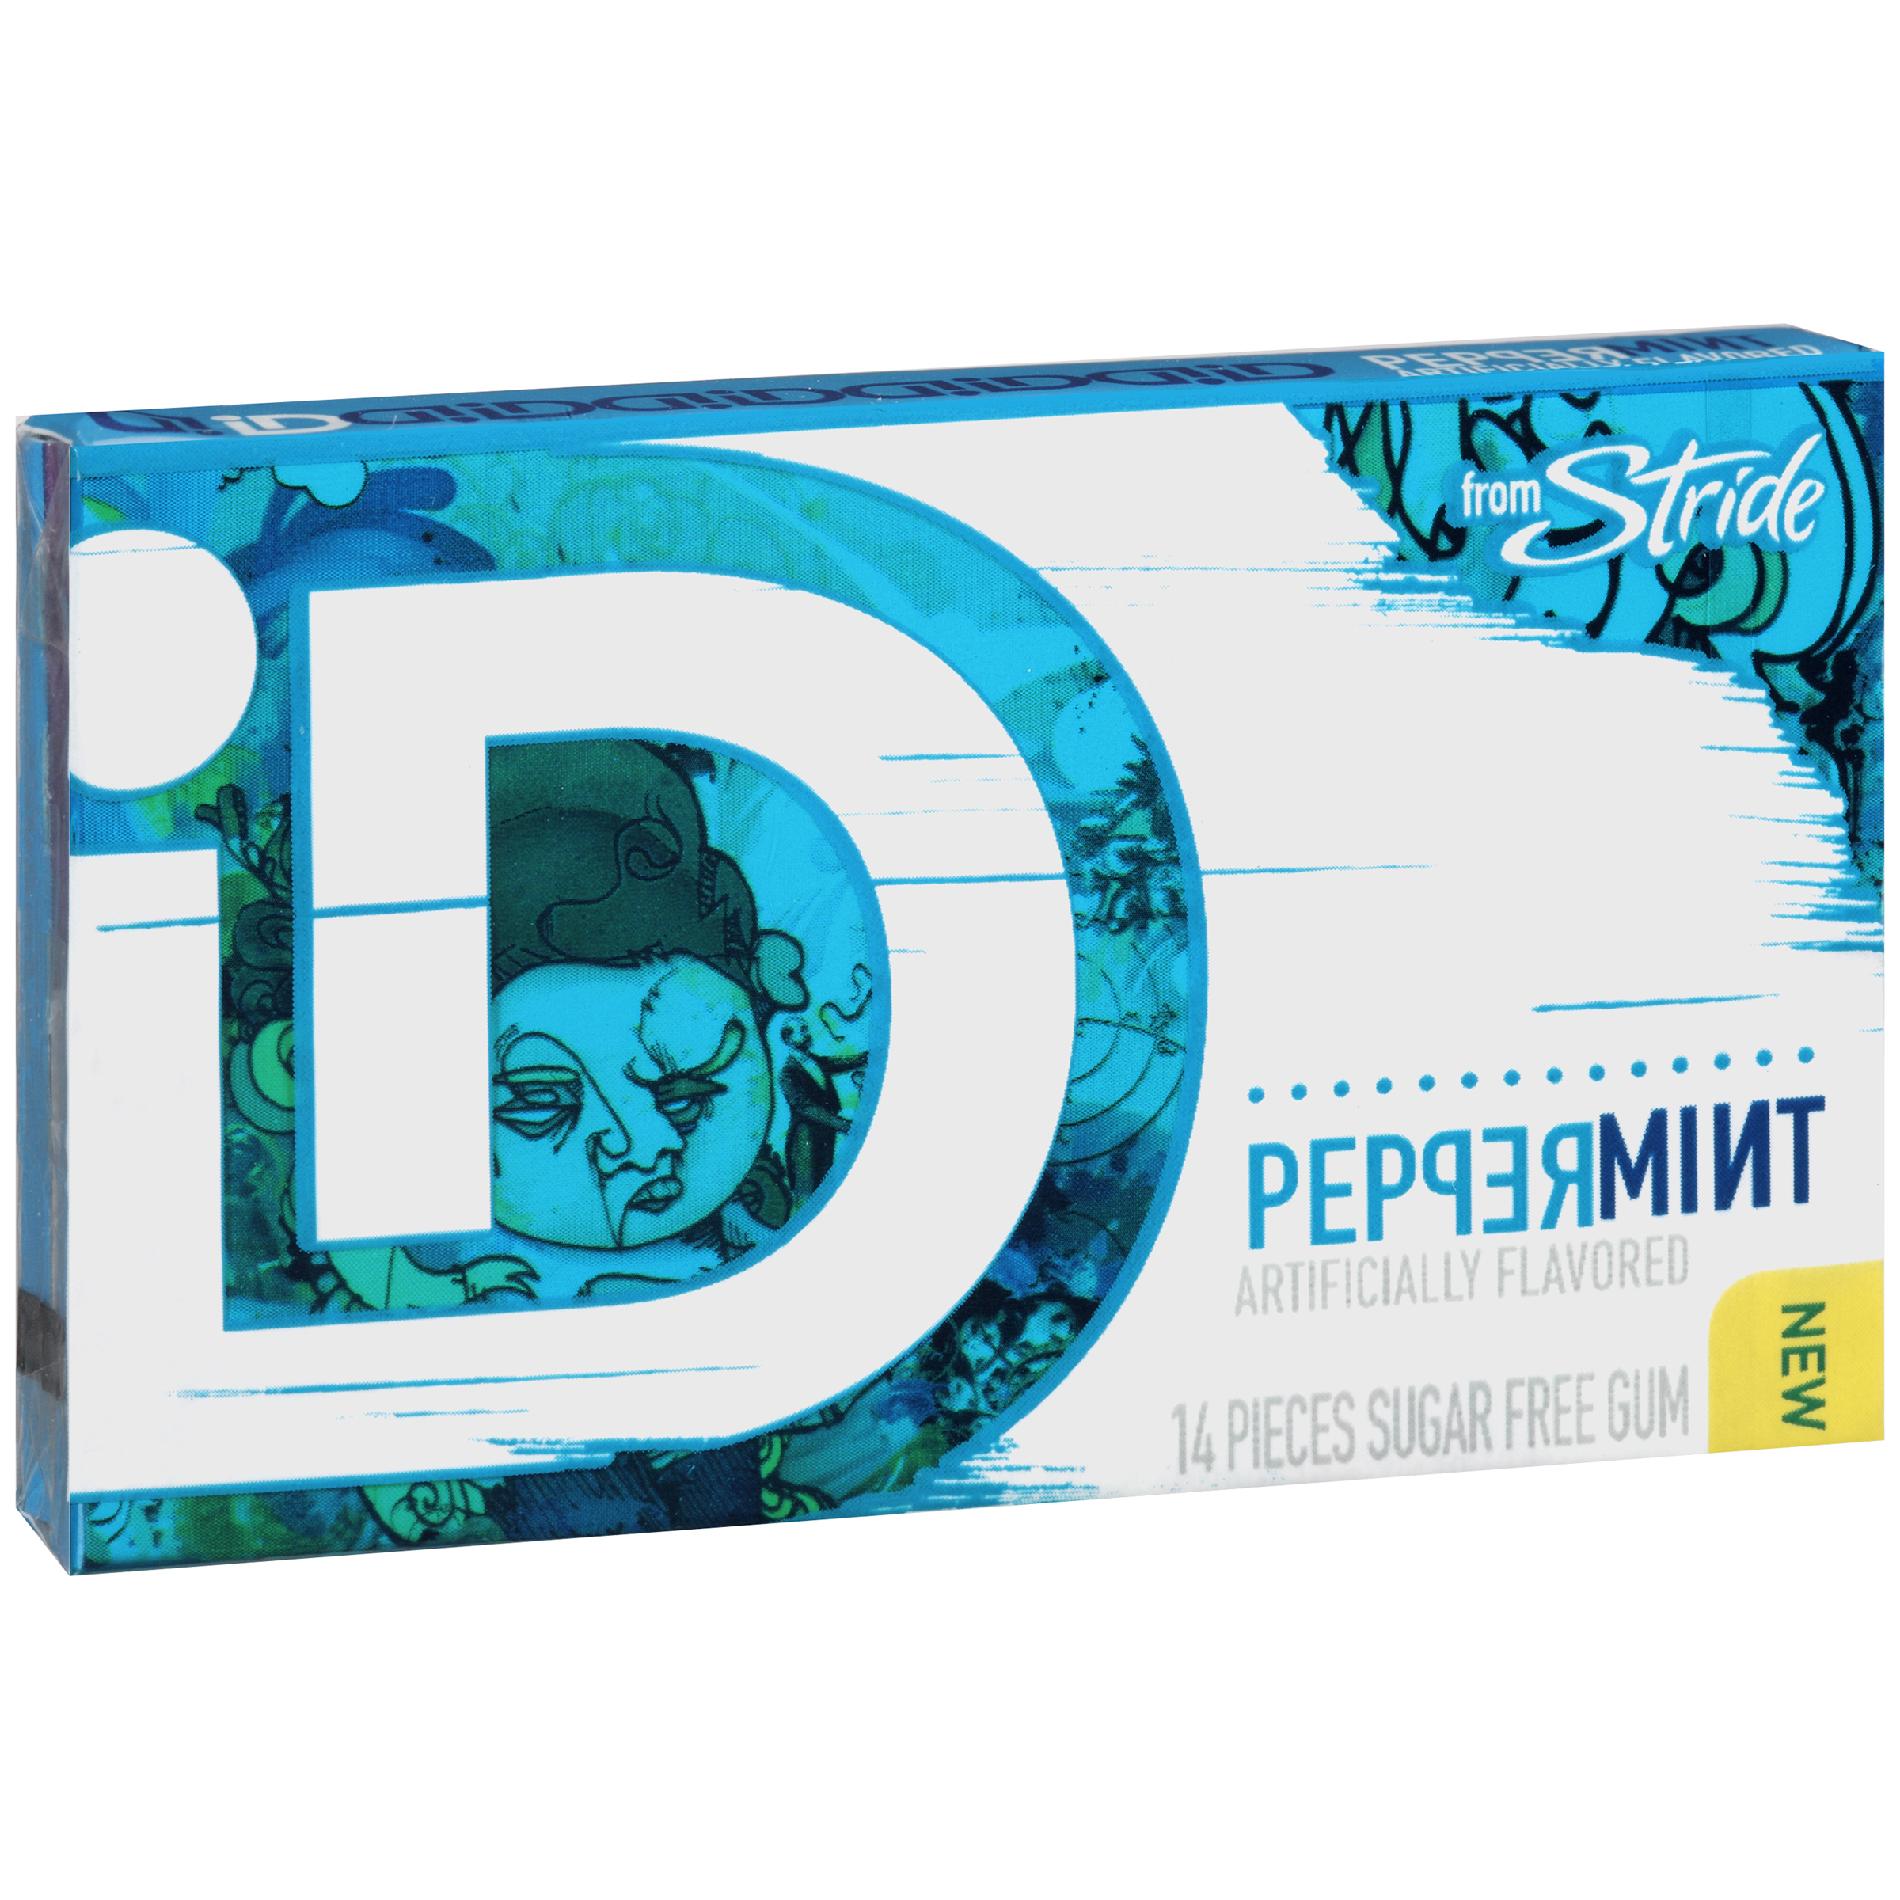 Kraft Sugar Free Gum, Peppermint 14 Pieces, 1 pk